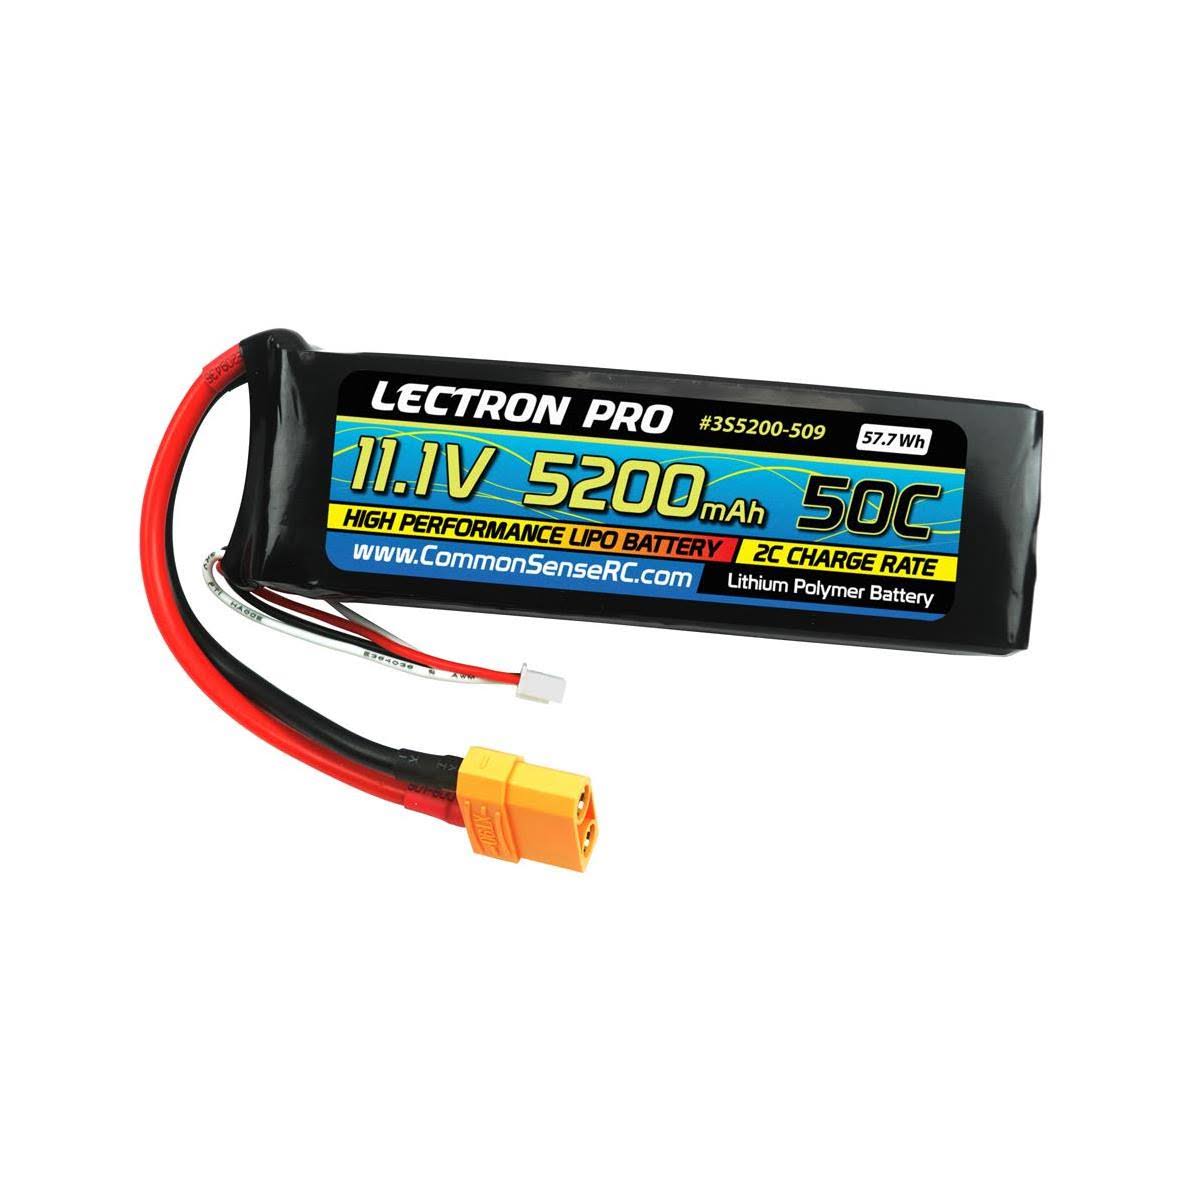 Lectron Pro 11.1v 5200mah 50c Lipo Battery Connector